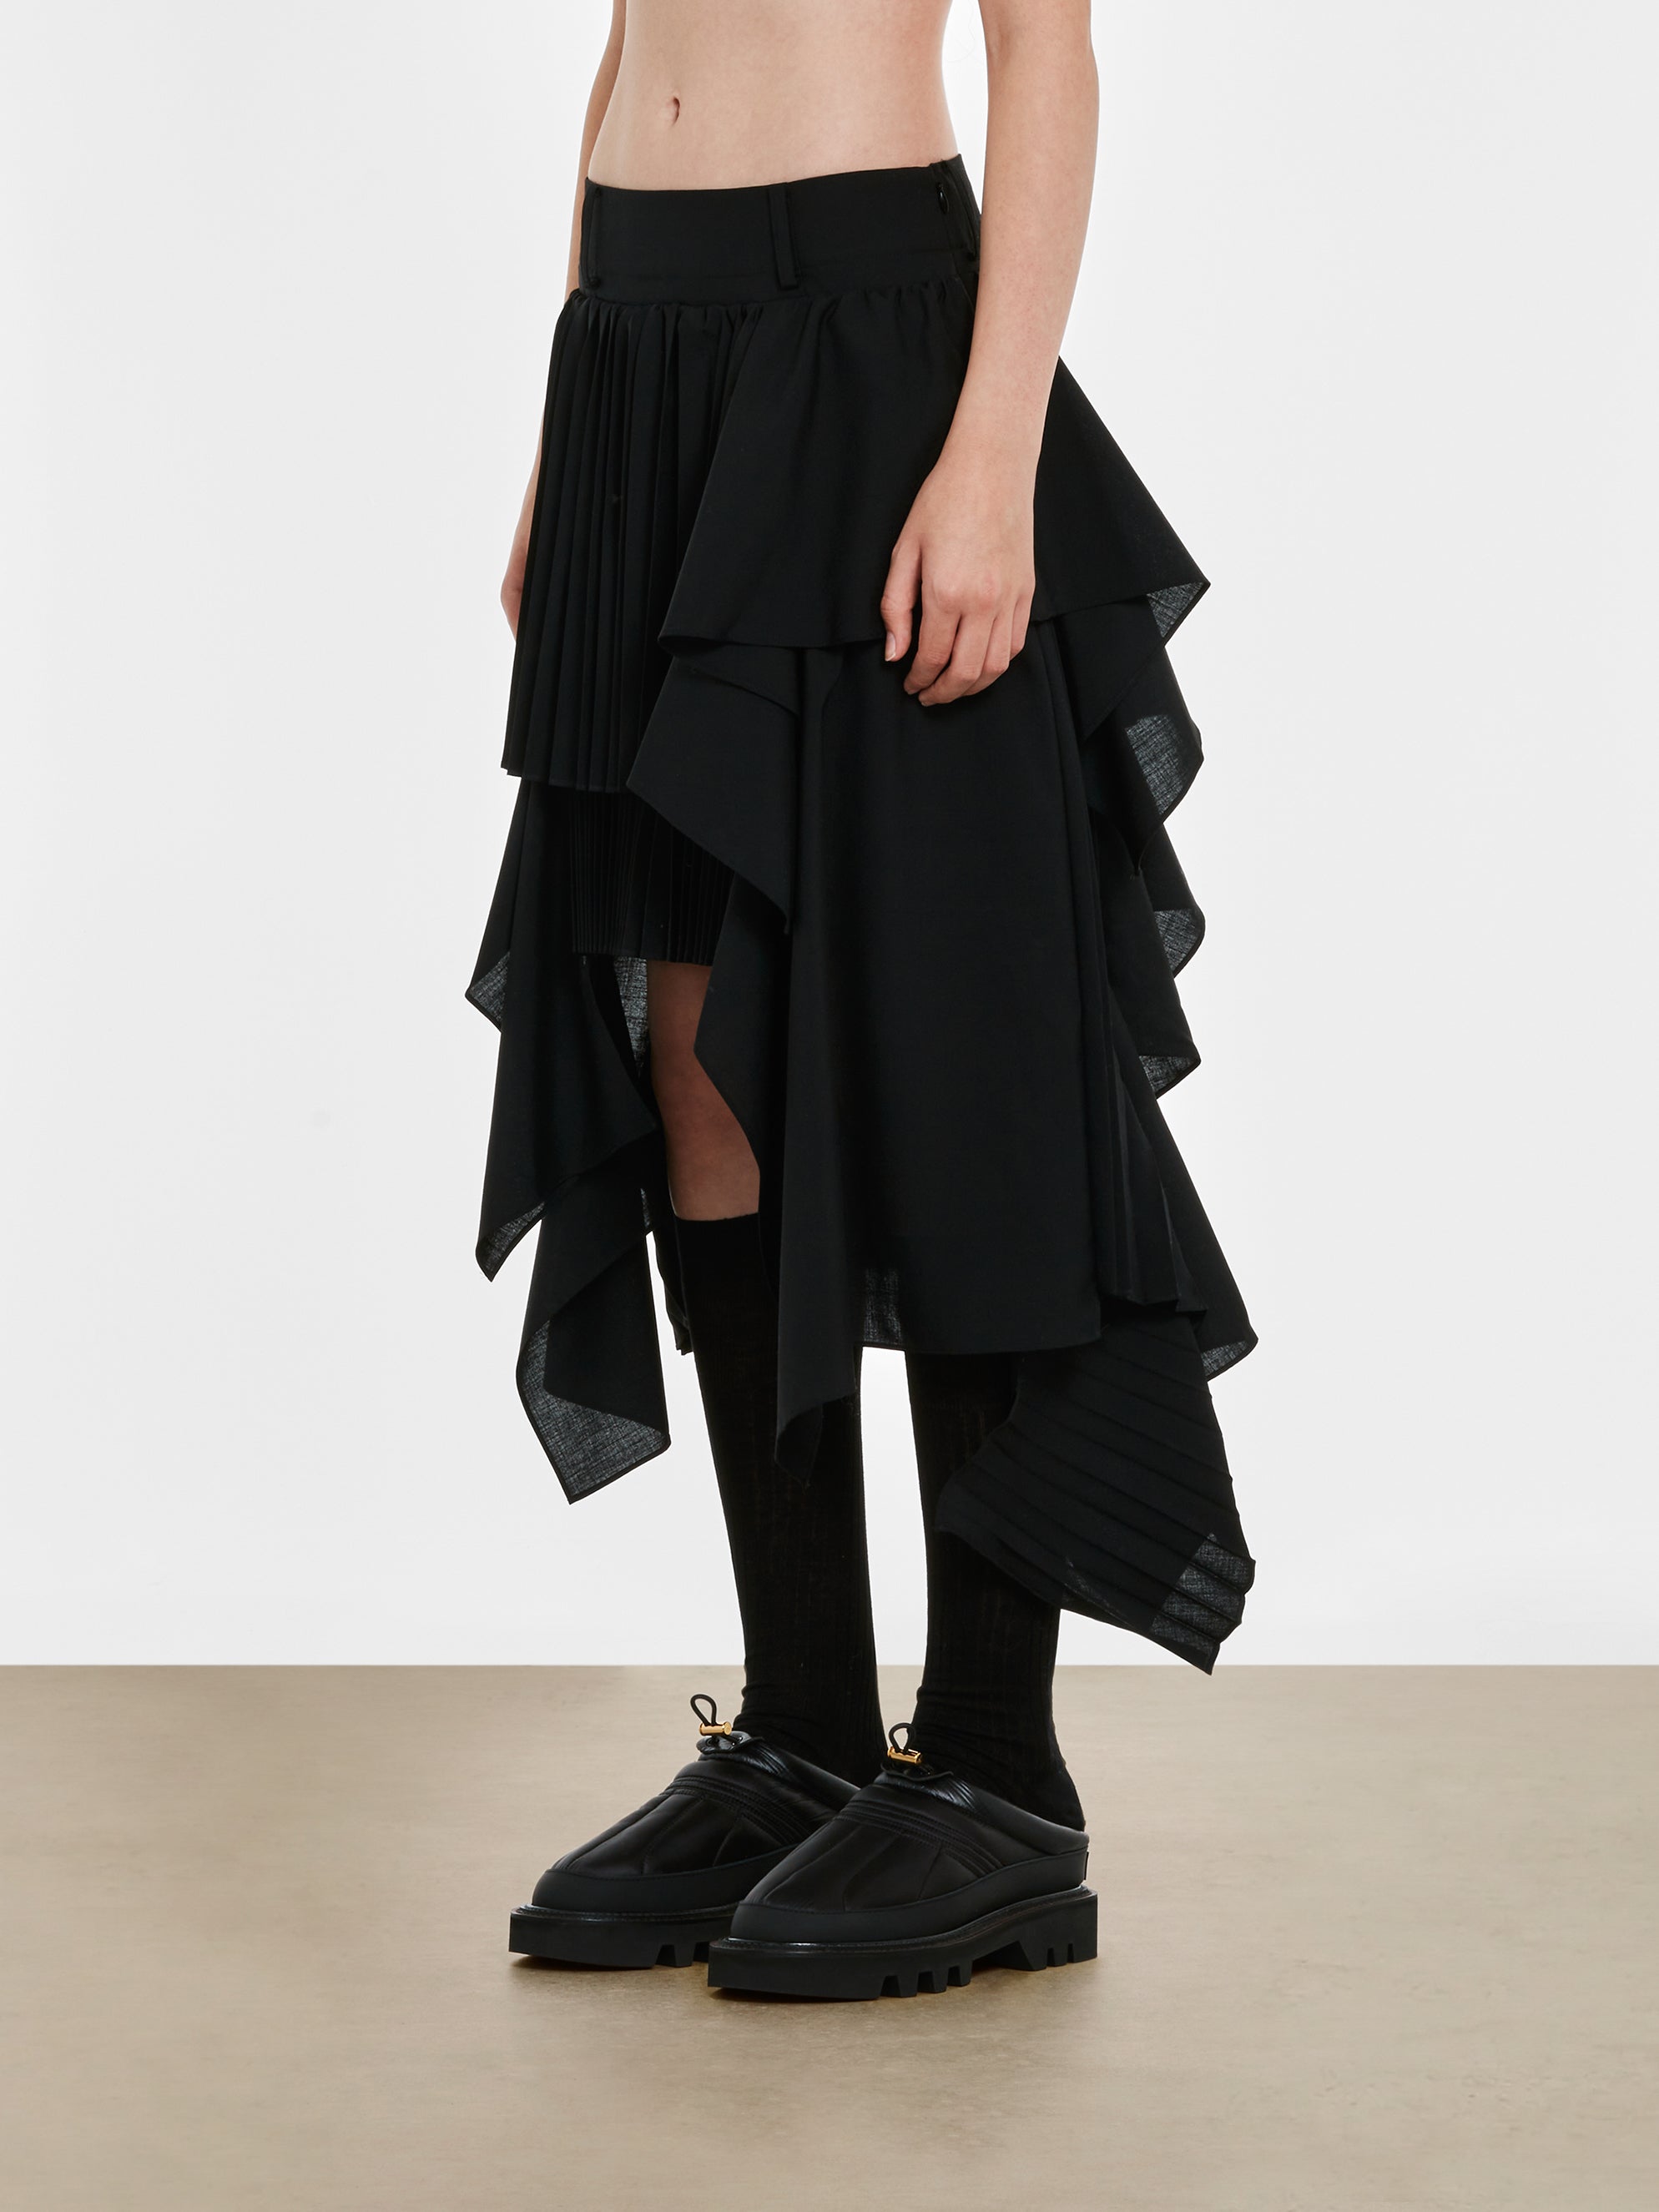 Sacai - Women’s Suiting Mix Skirt - (Black) view 3